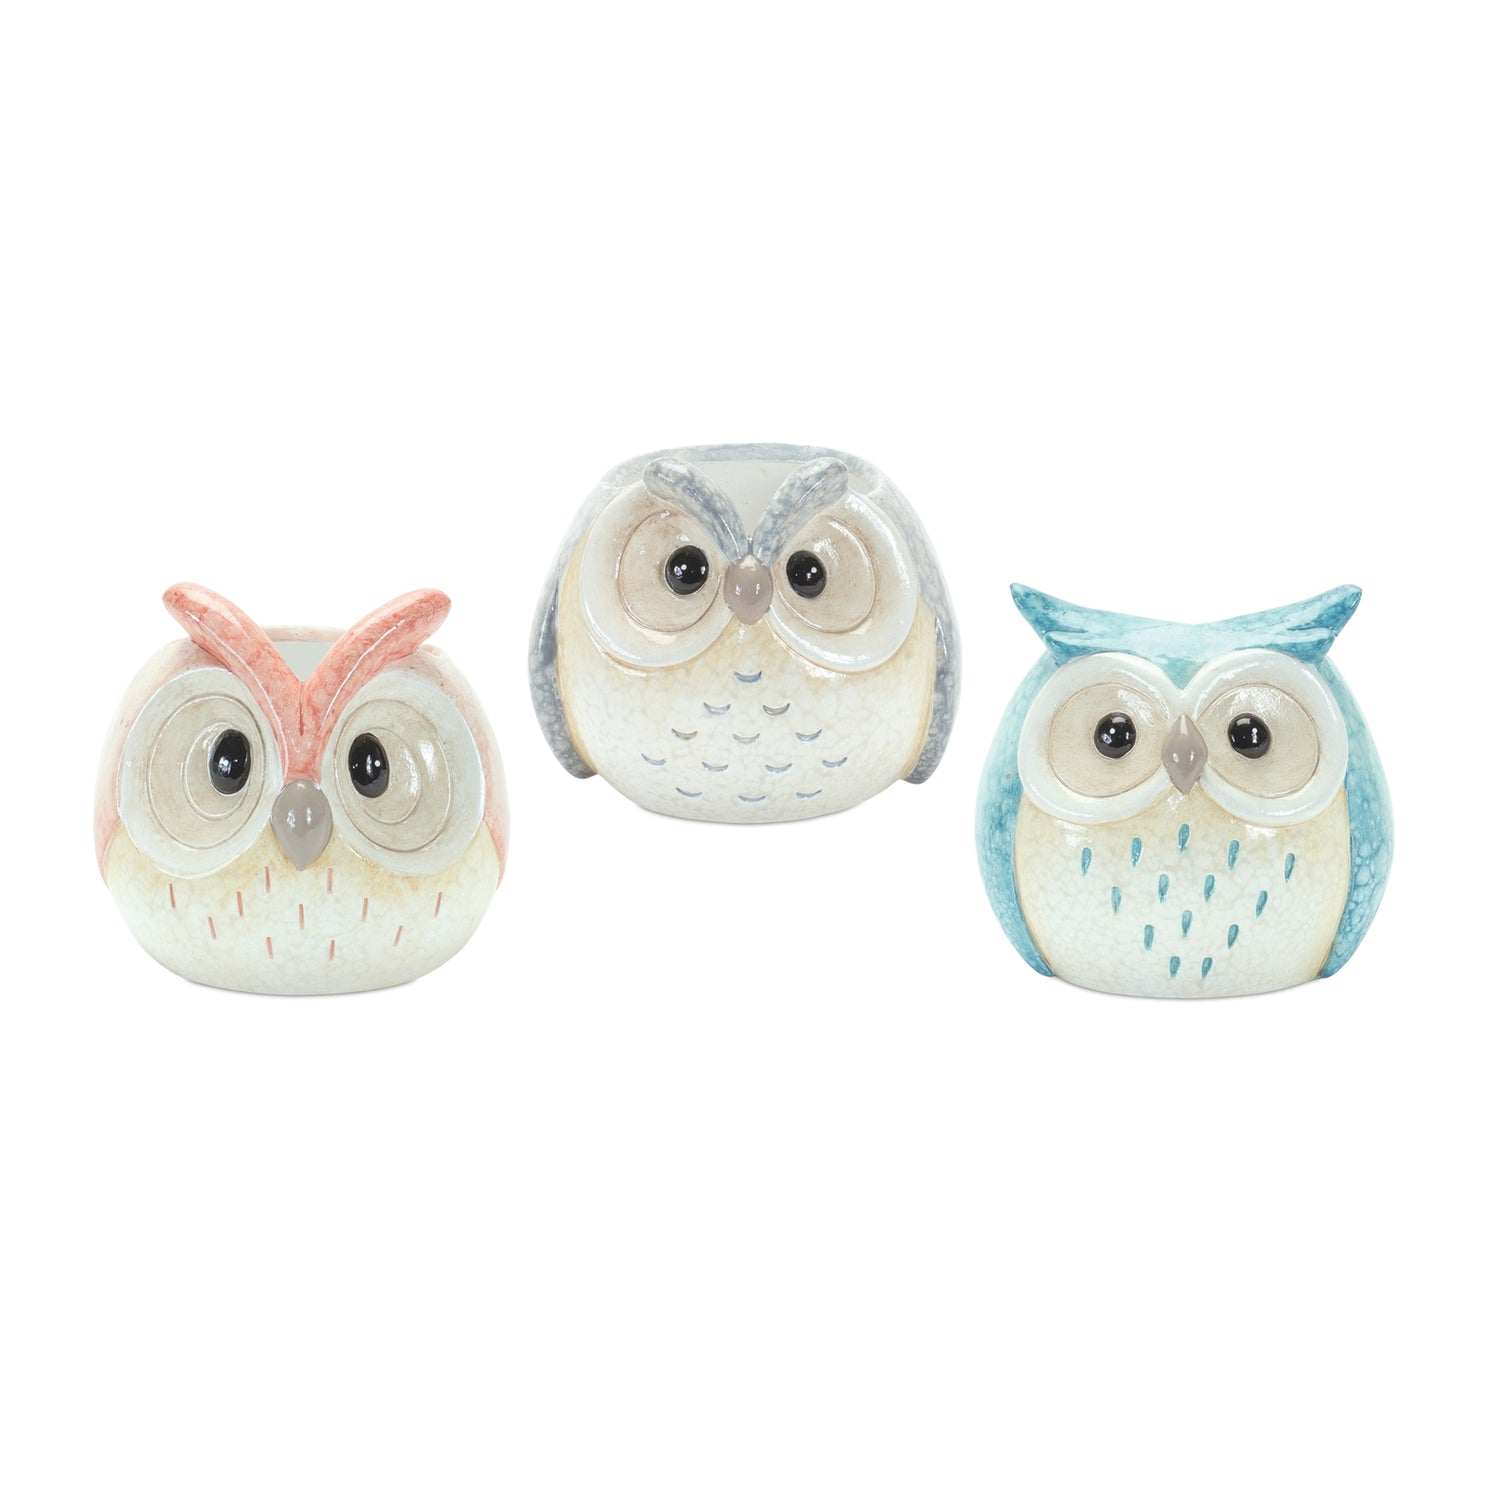 Owl (Set of 3) 3.75"H, 4"H, 4.25"H Terra Cotta